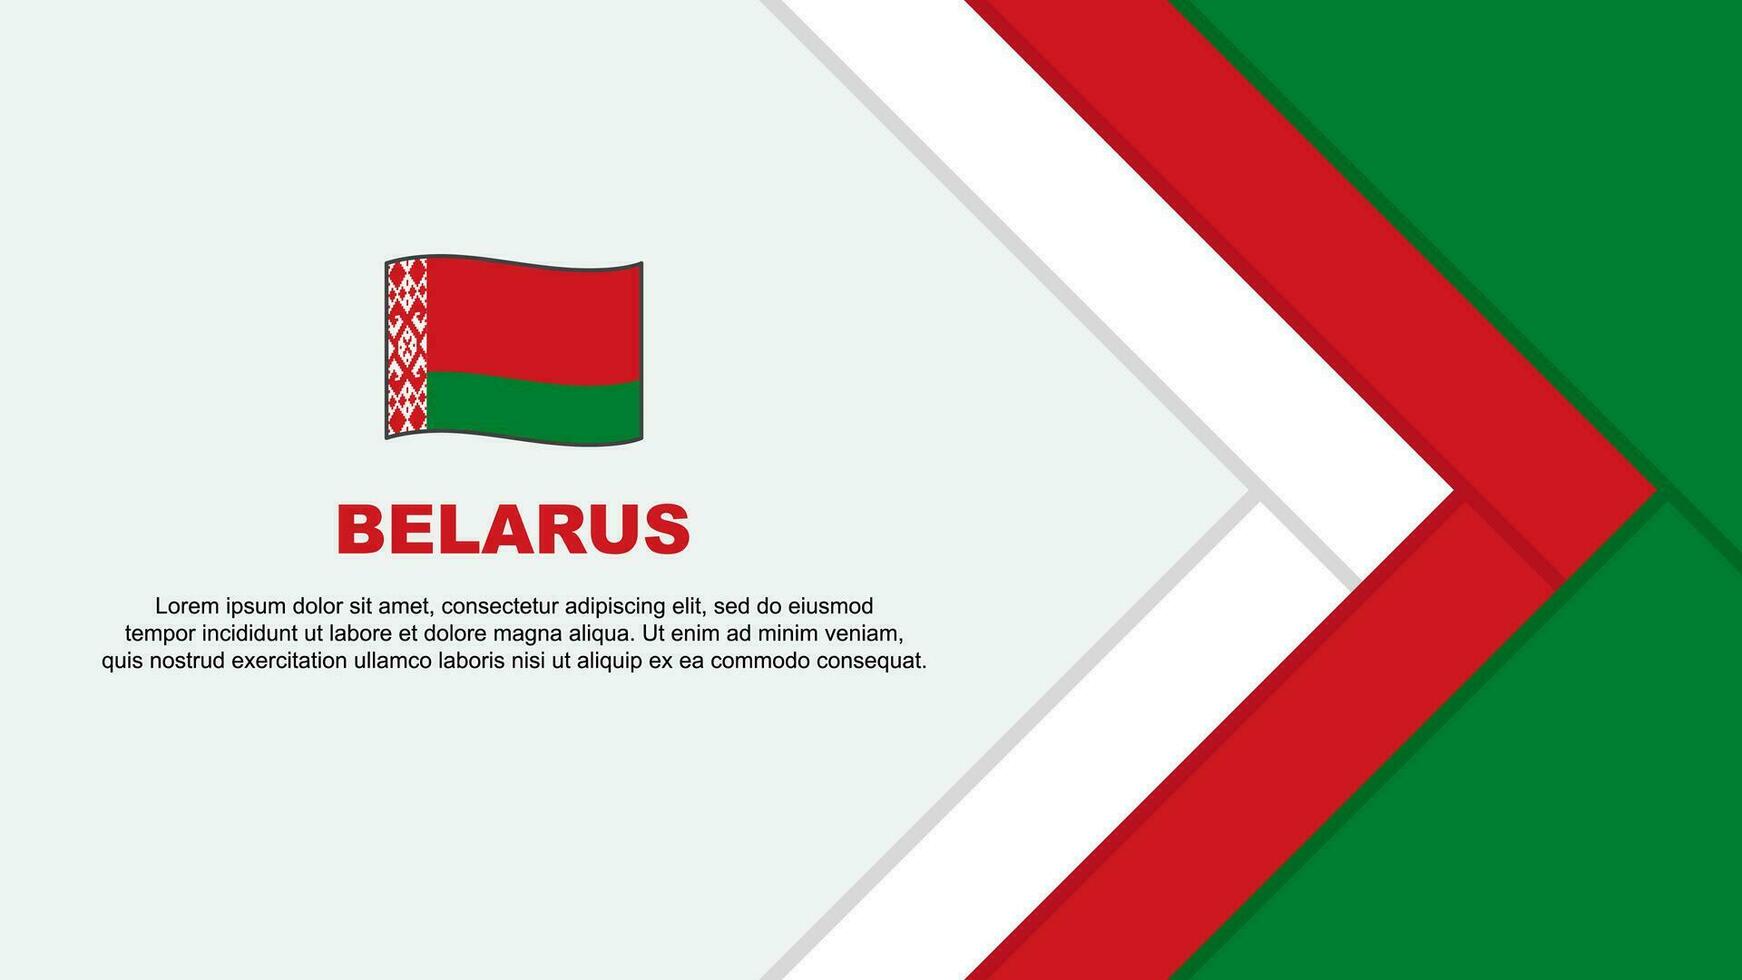 Belarus Flag Abstract Background Design Template. Belarus Independence Day Banner Cartoon Vector Illustration. Belarus Cartoon